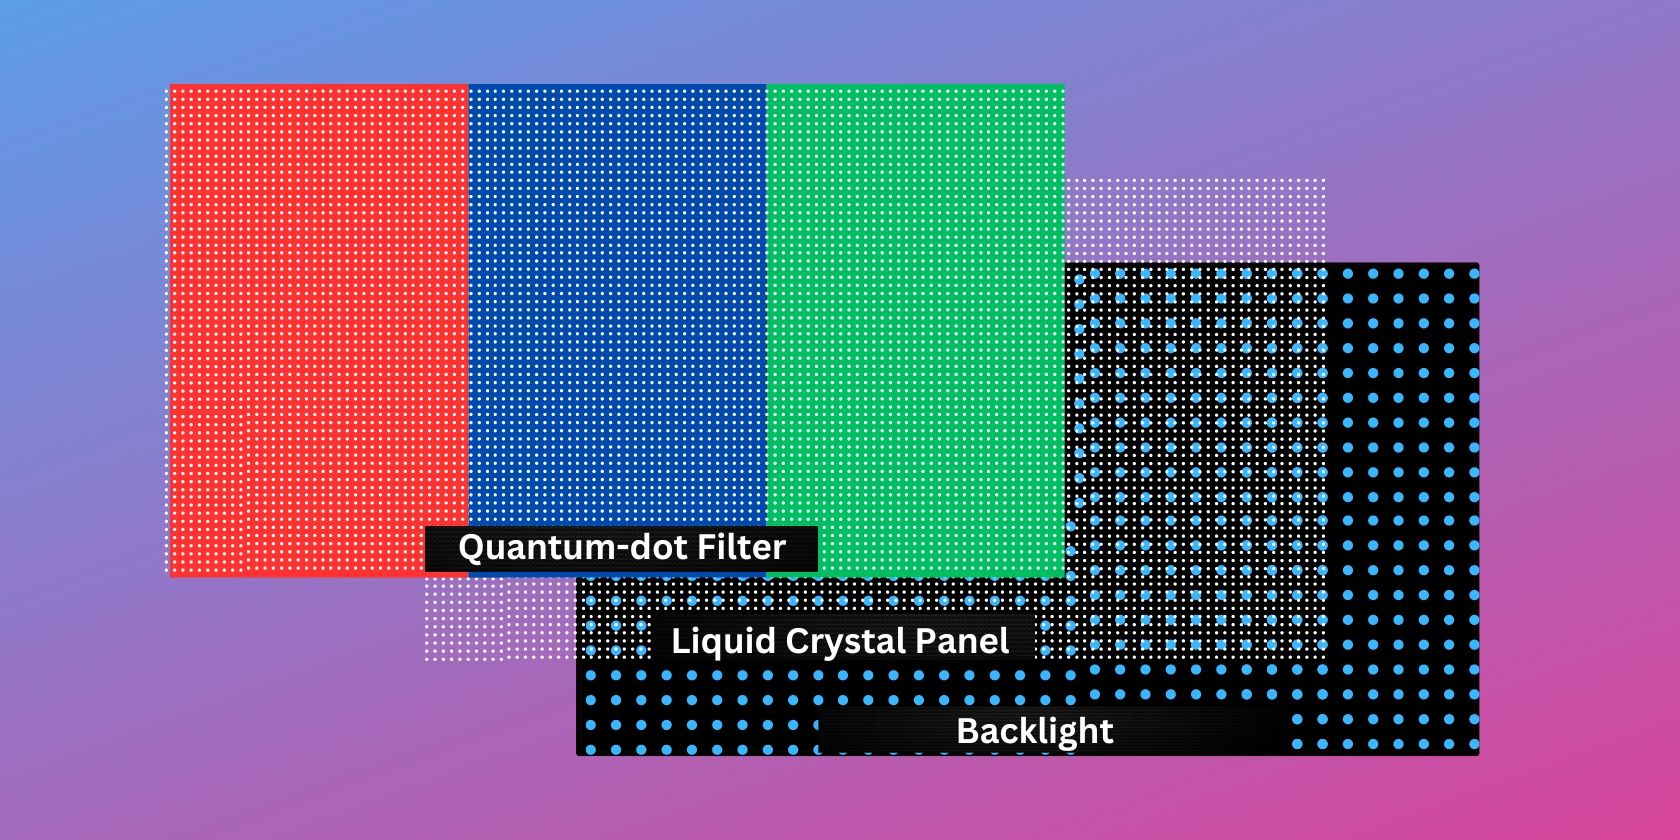 Three layers of QLED displays